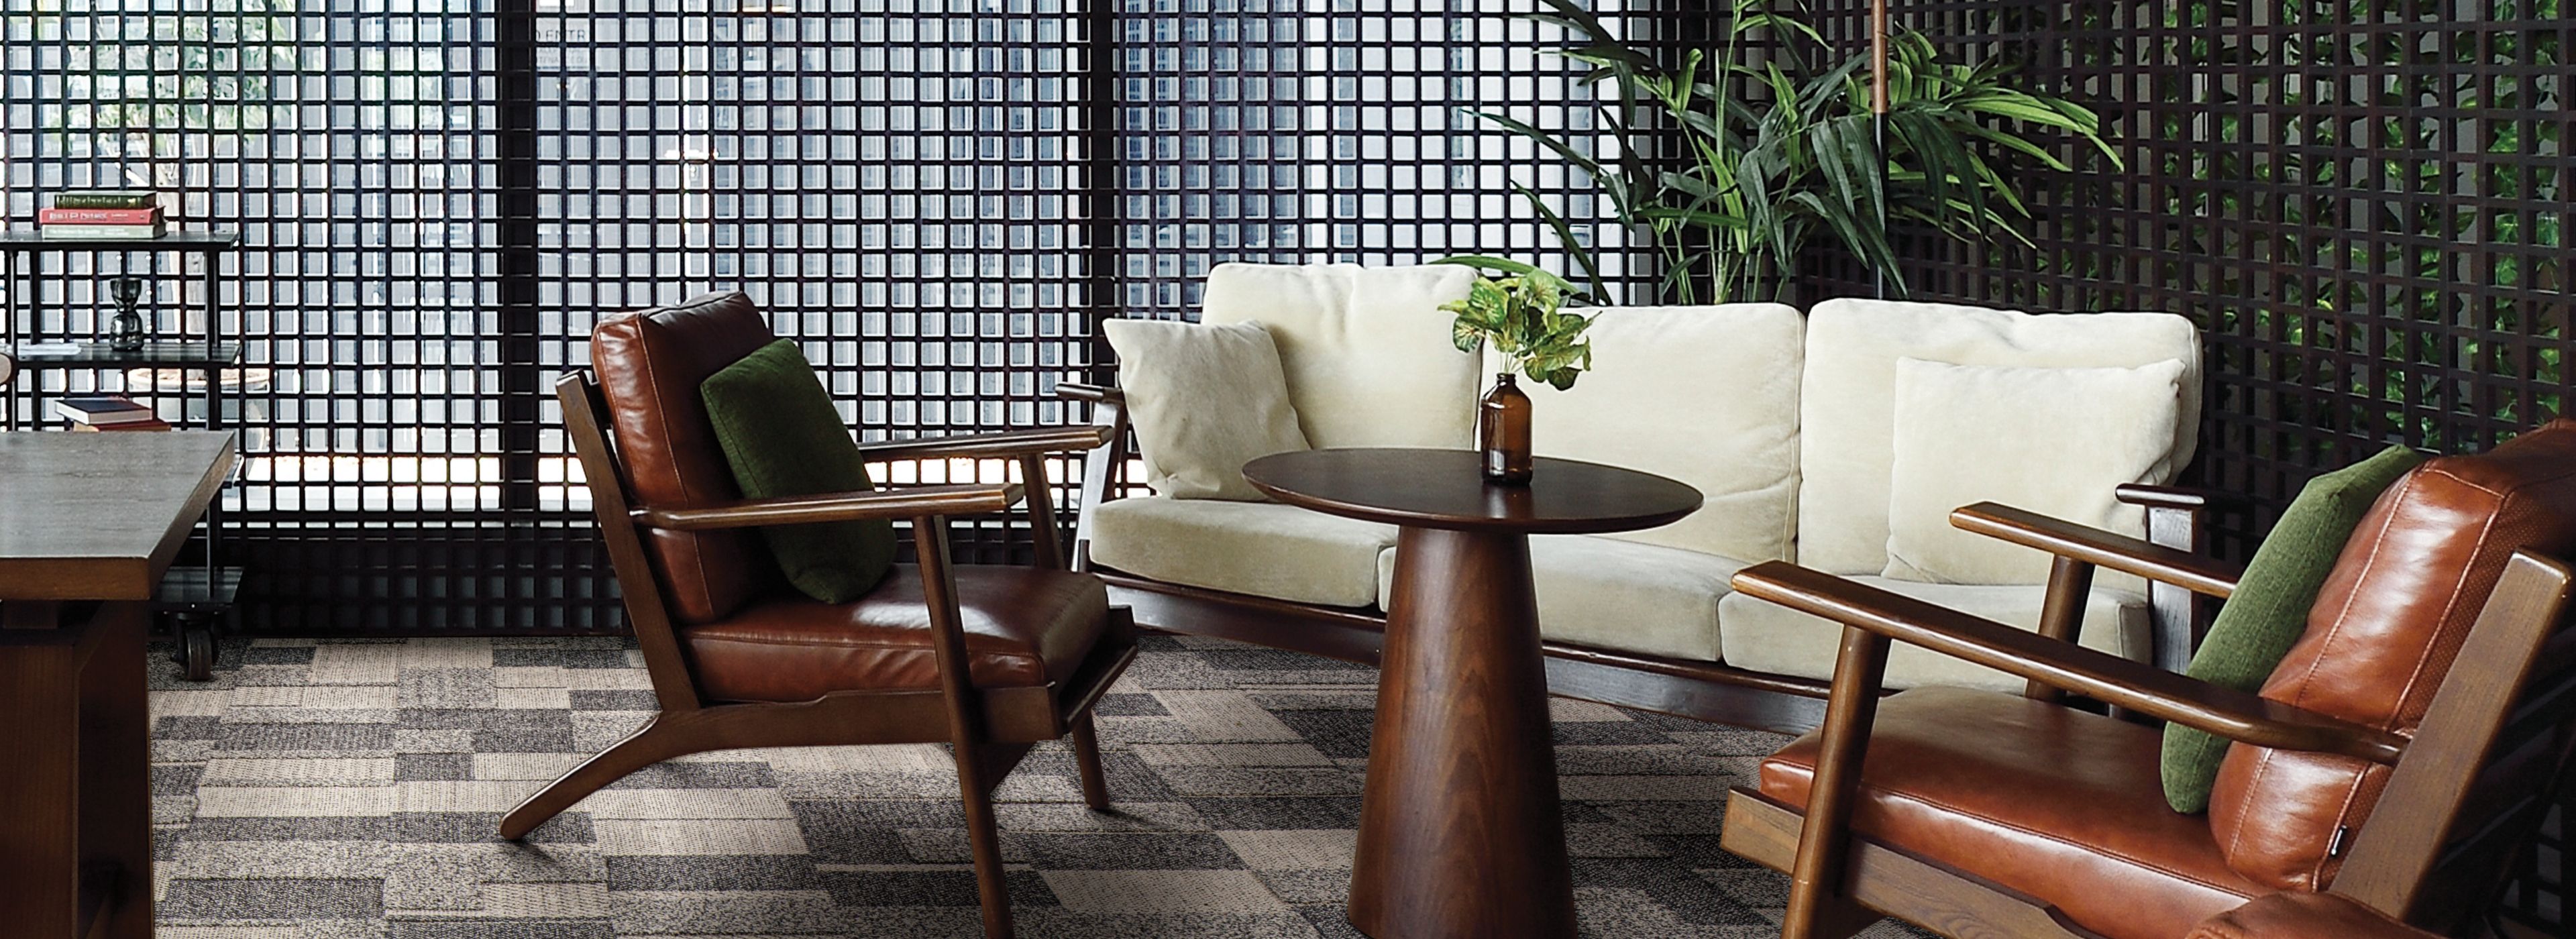 Interface Future Woven plank carpet tile in seating area imagen número 1